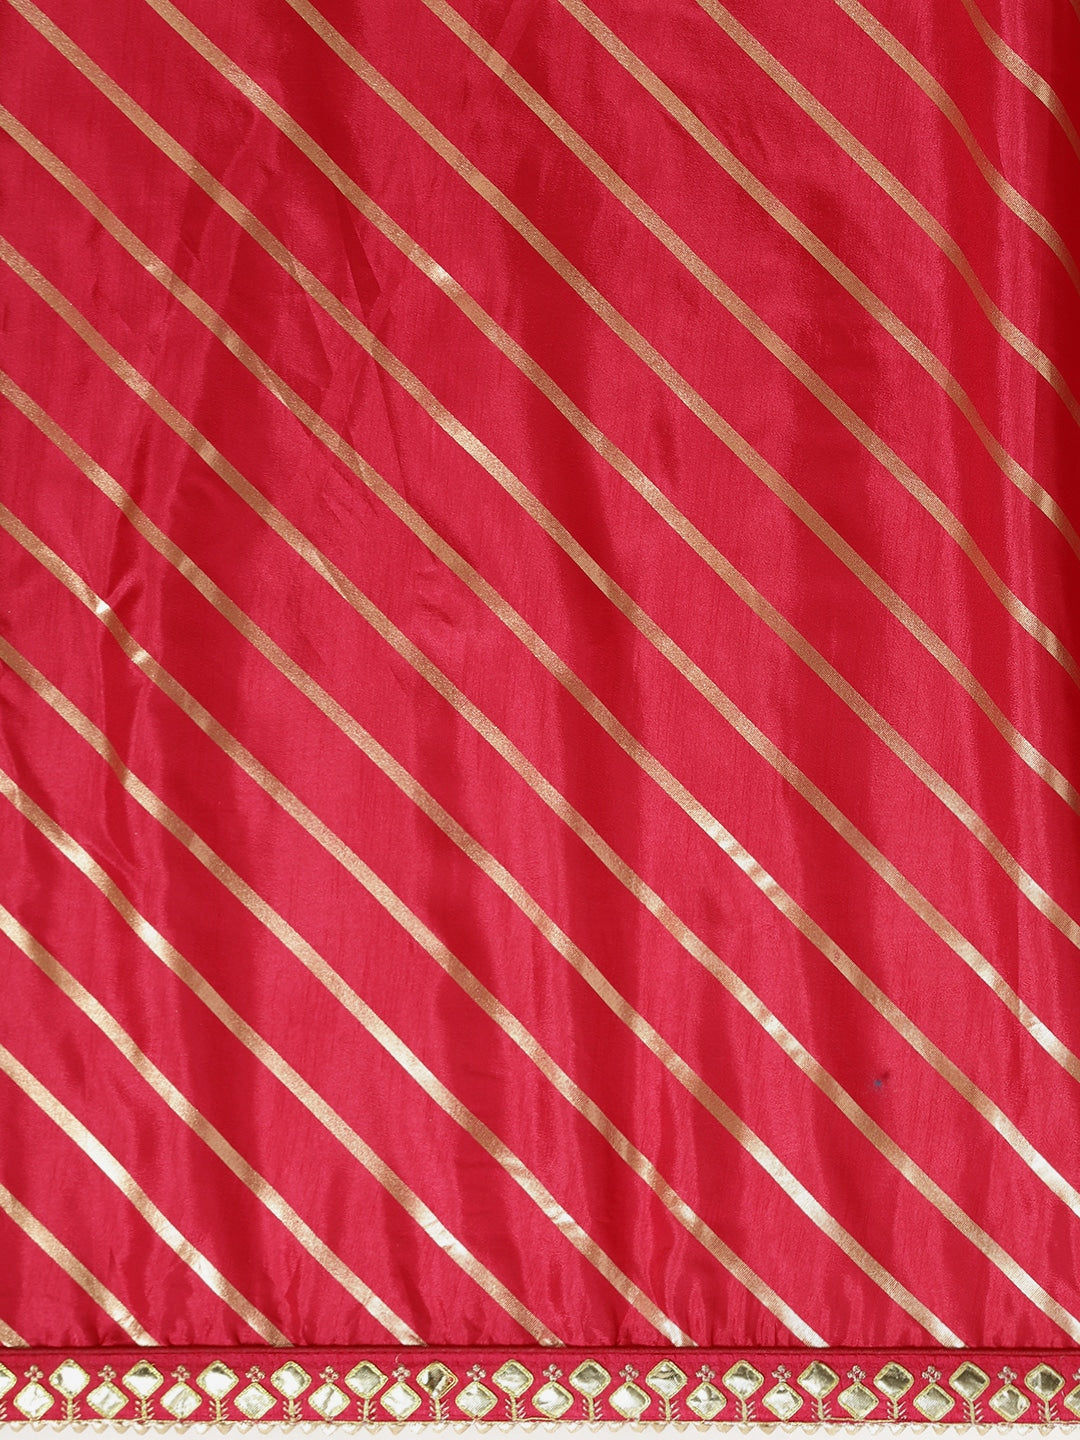 Polyester Leheriya Embroidered Red Saree